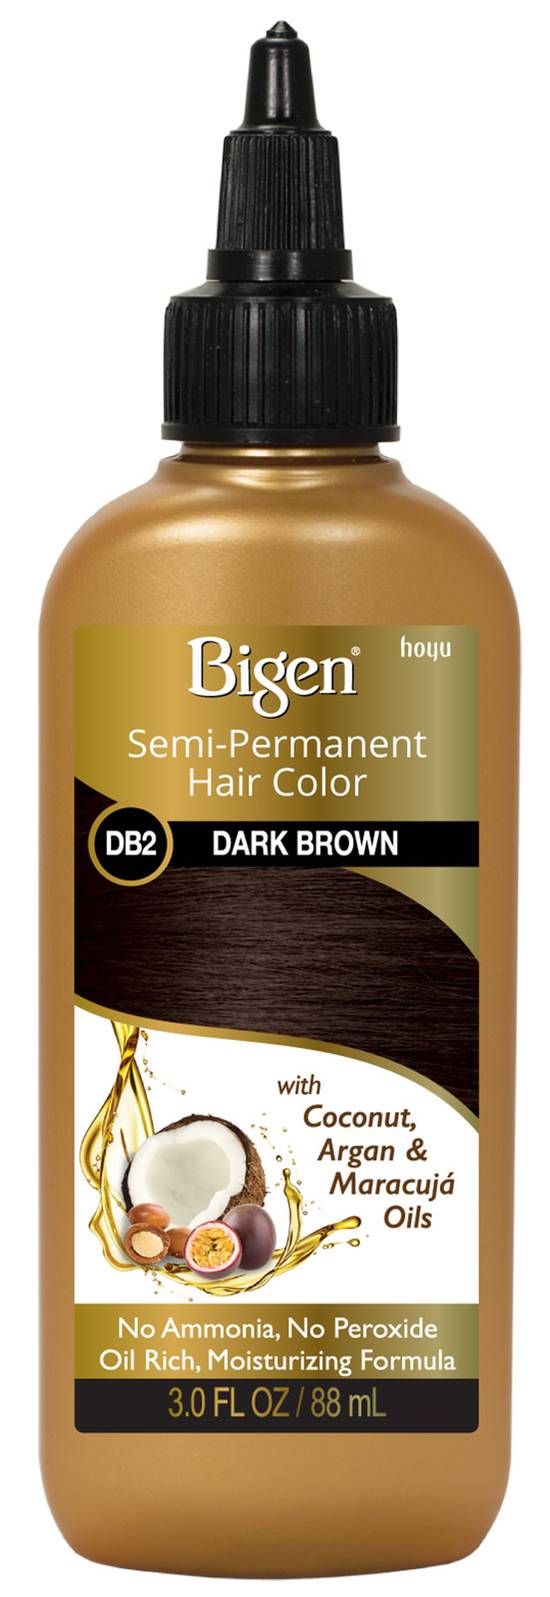 Bigen Semi-Permanent Hair Color - Dark Brown, 3 fl oz